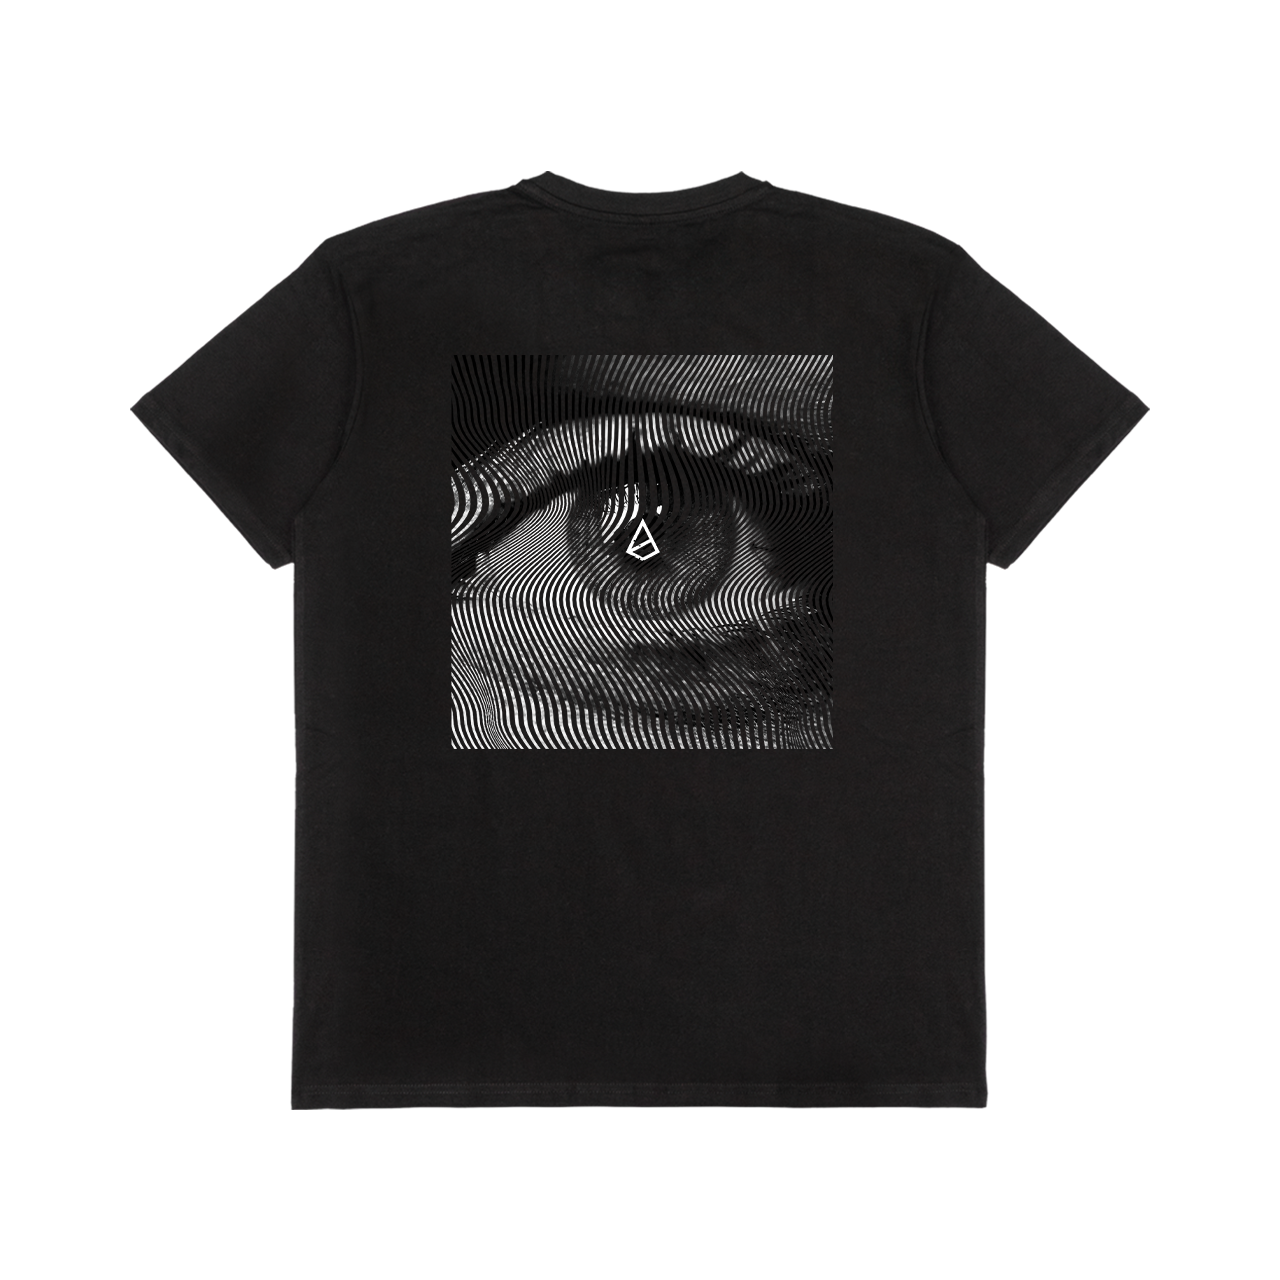 Snash - Eye of Snash T-Shirt